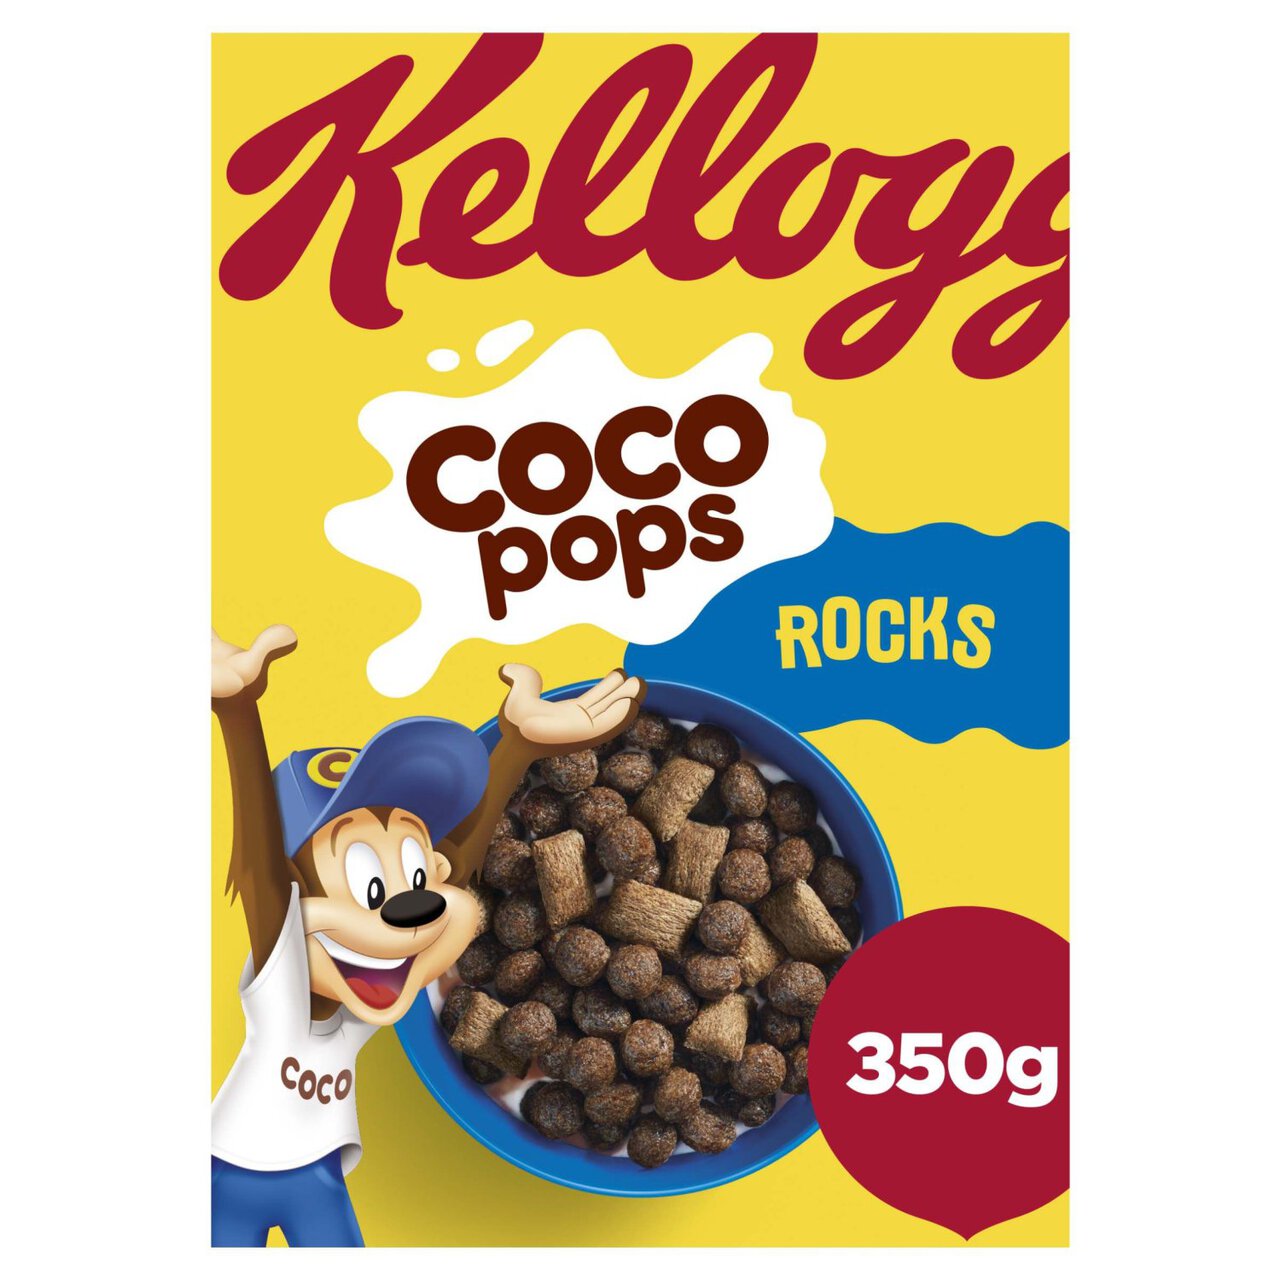 Kellogg's Coco Pops Coco Rocks Breakfast Cereal 350g 350g